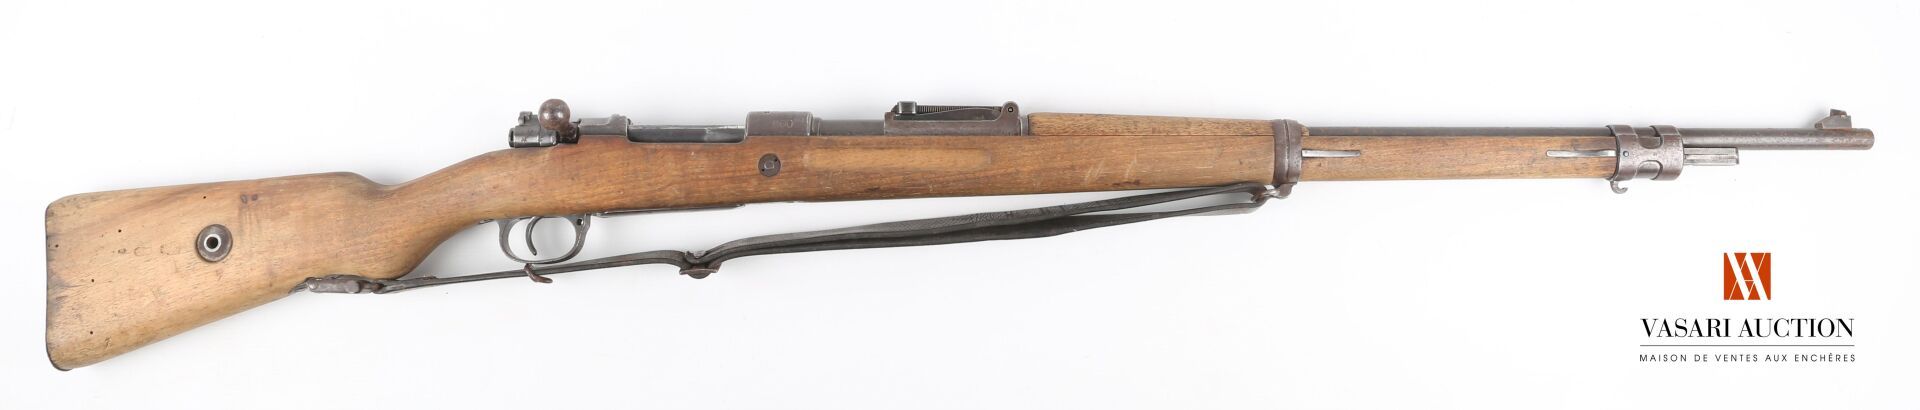 Null Mauser-Gewehr Modell G98 Kaliber 8x57 js, Herstellung DANTZIG 1917/18, Donn&hellip;